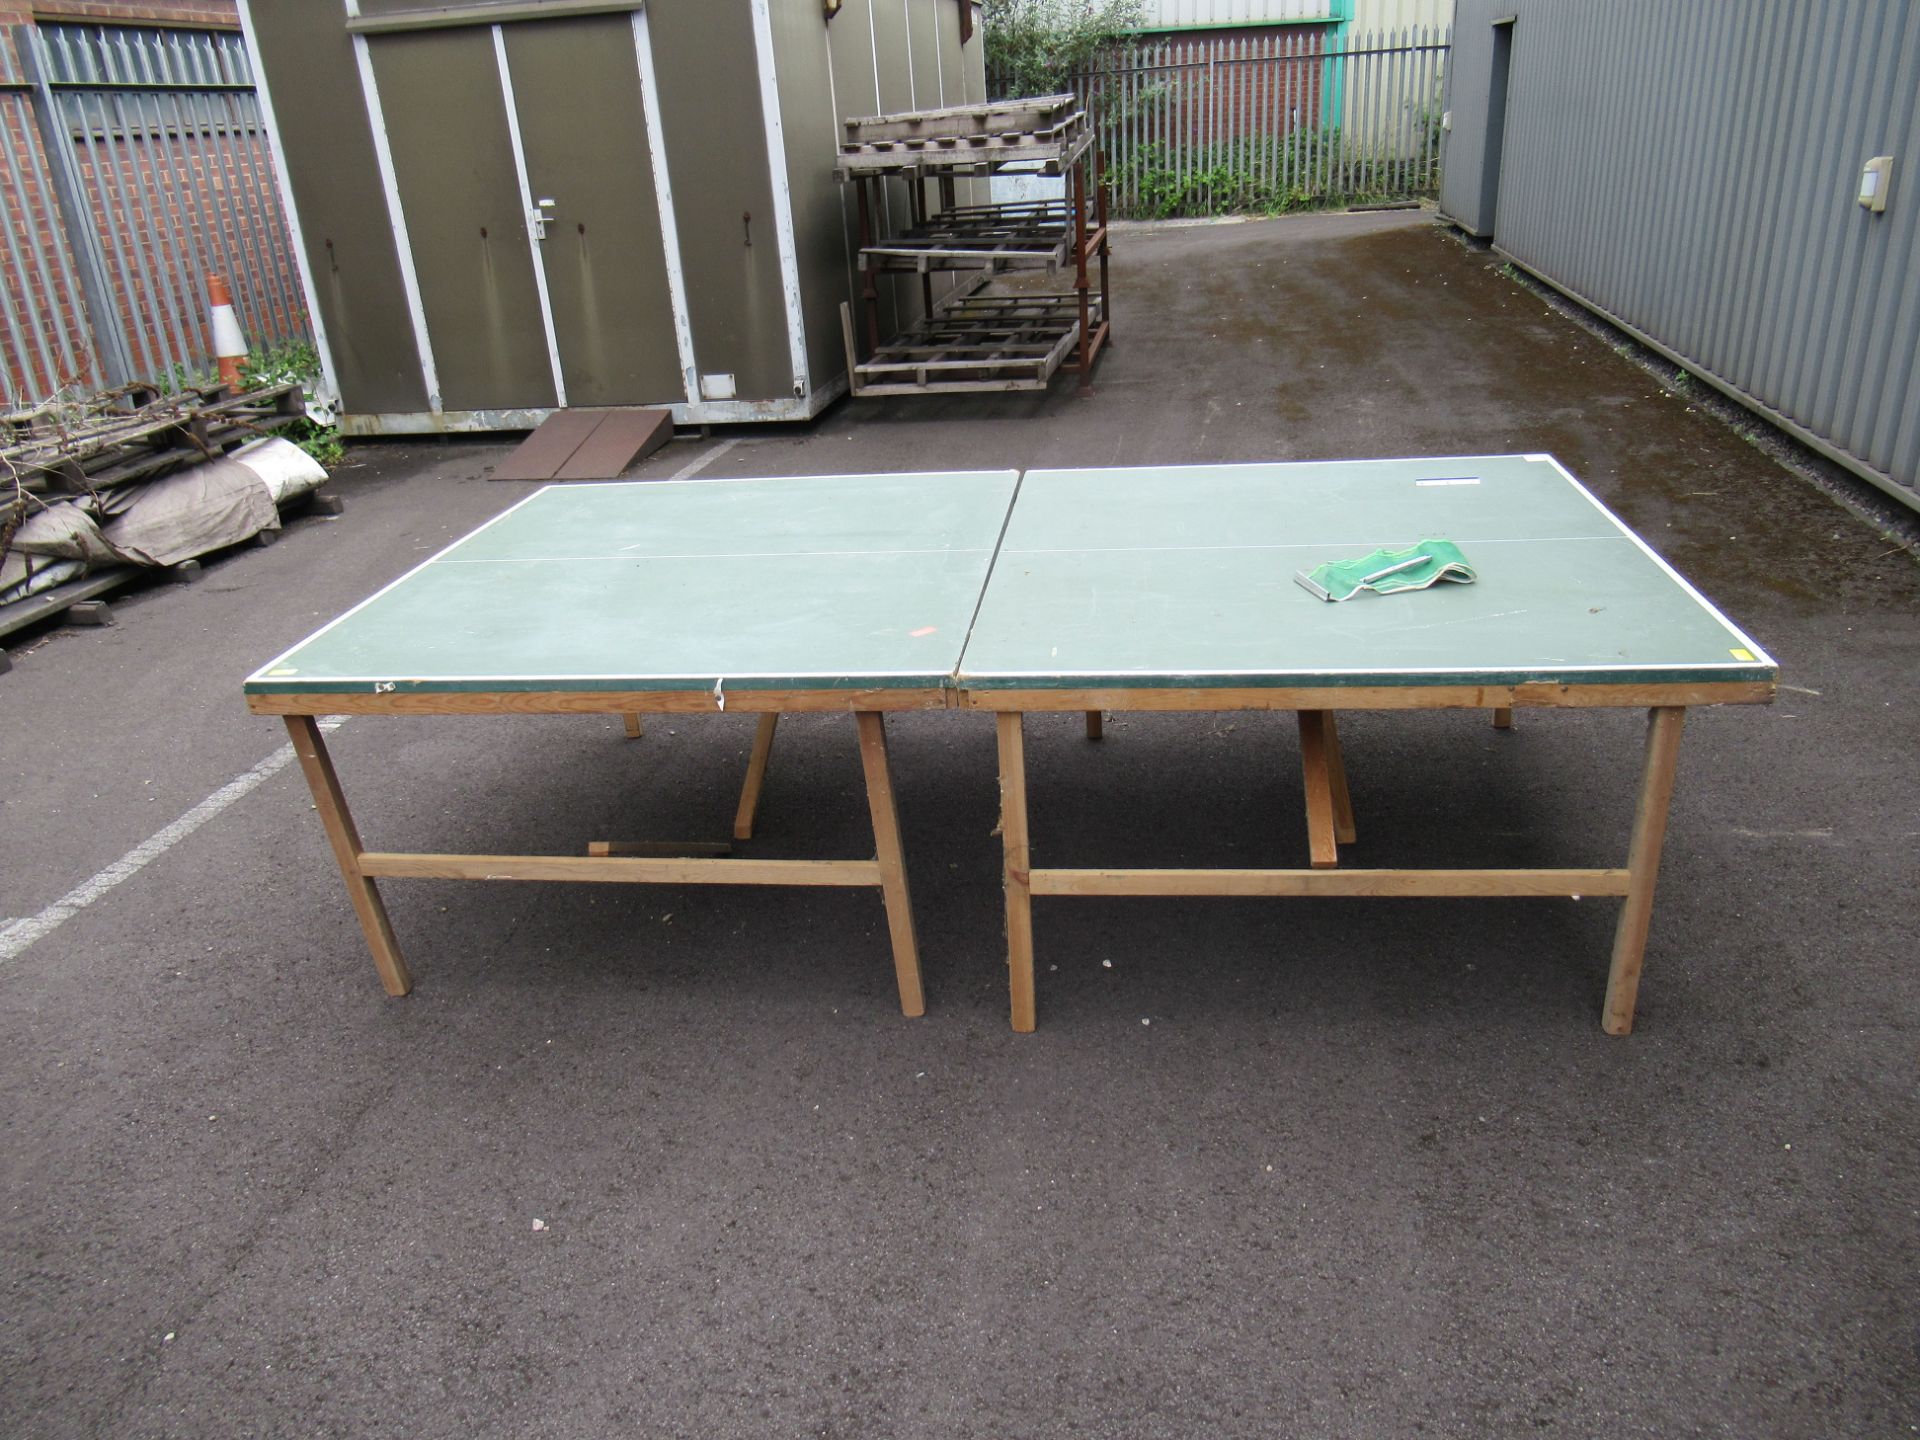 Spensport table-tennis table